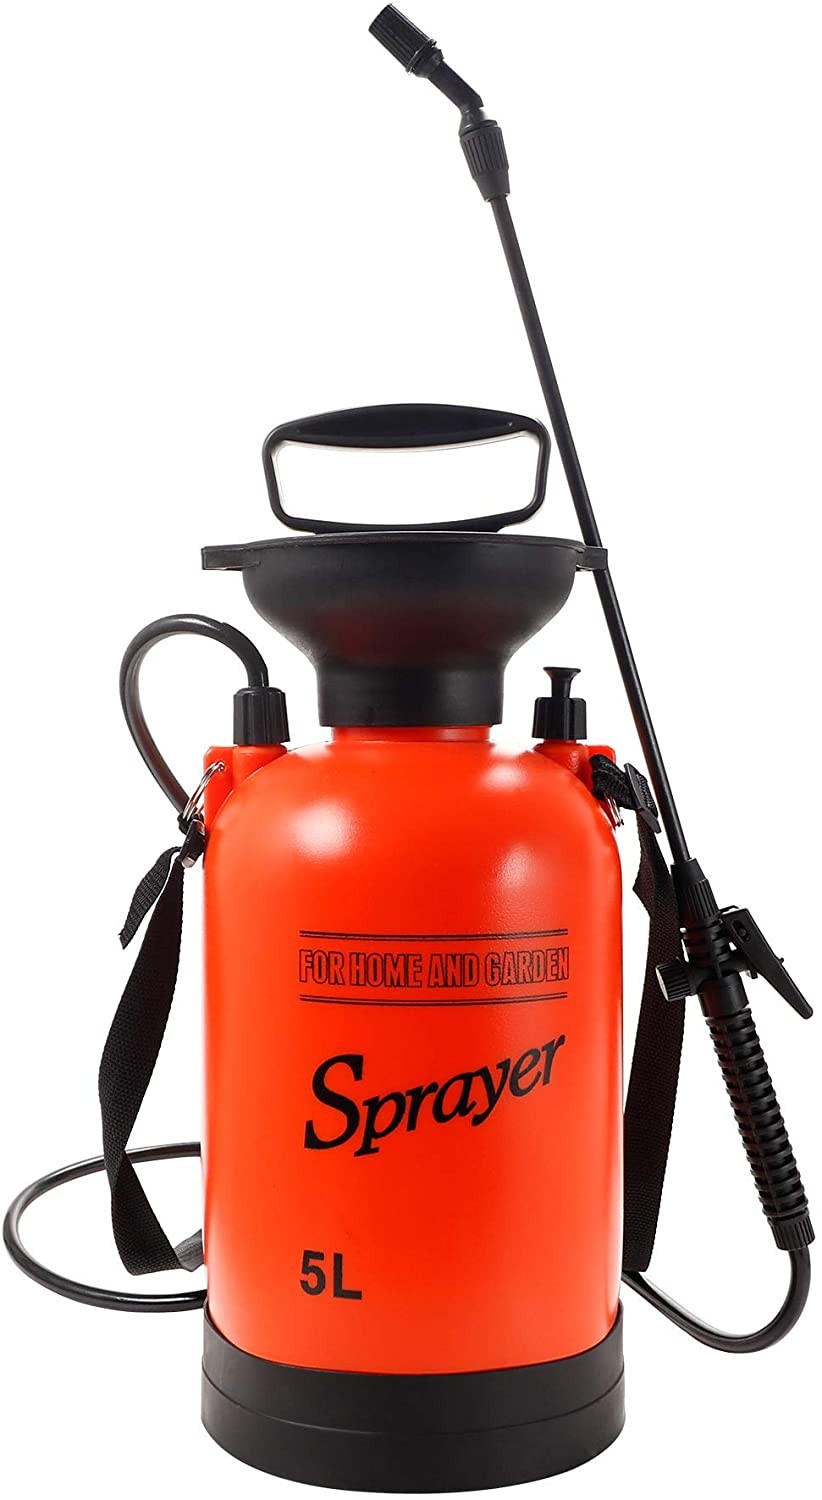  Pump Sprayer in Lawn and Garden 1.3-Gallon Portable Pressure Sprayers